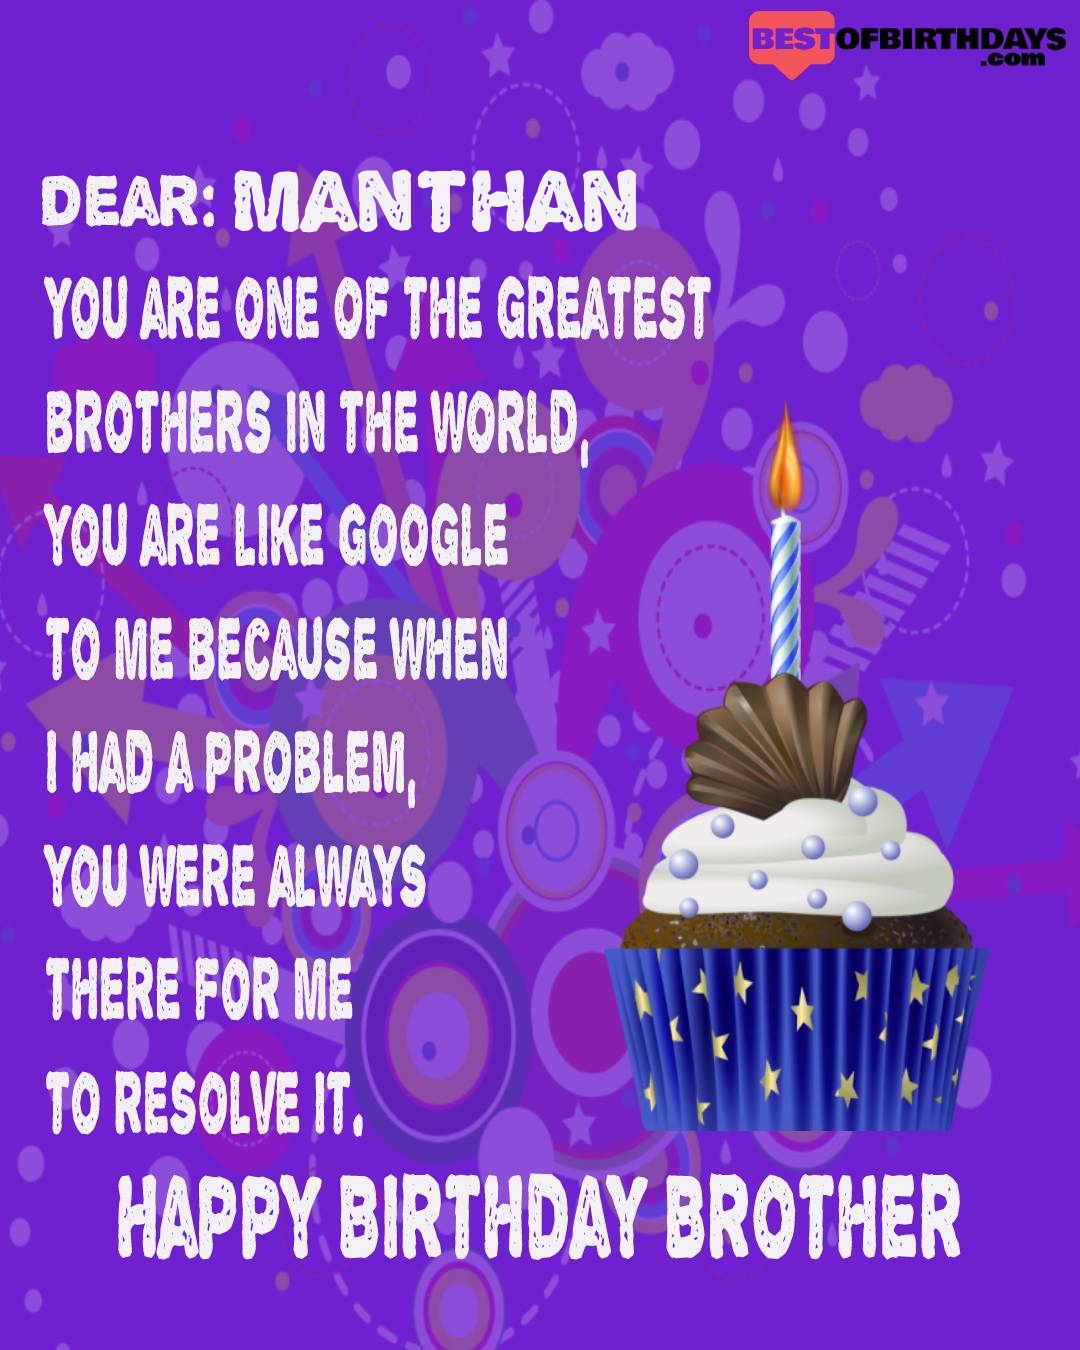 Happy birthday manthan bhai brother bro